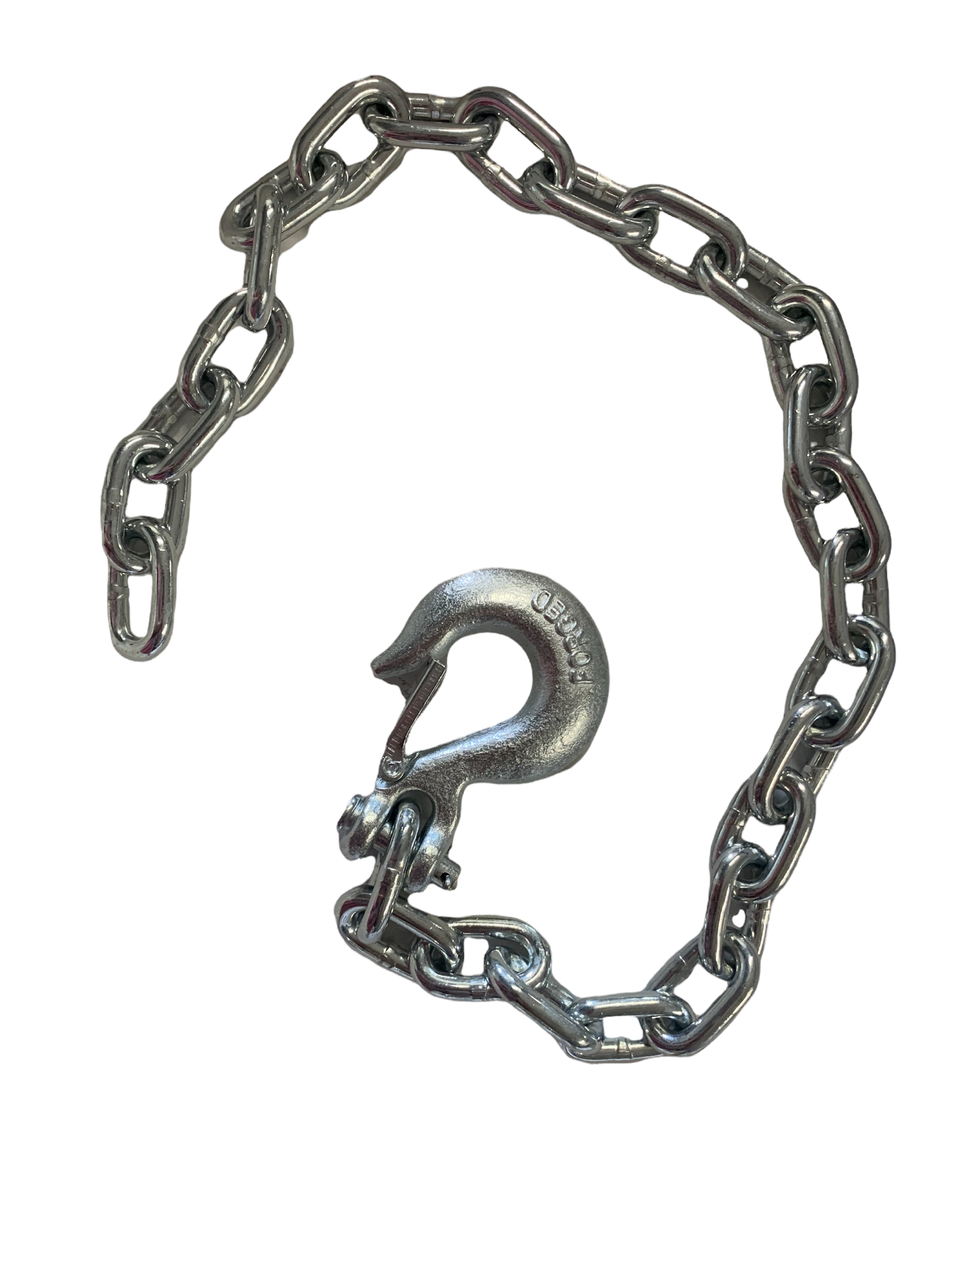 35 x 3/8 Gooseneck Safety Chain w/ GR43 Clevis Slip Latch Hook 16.2k Cap.